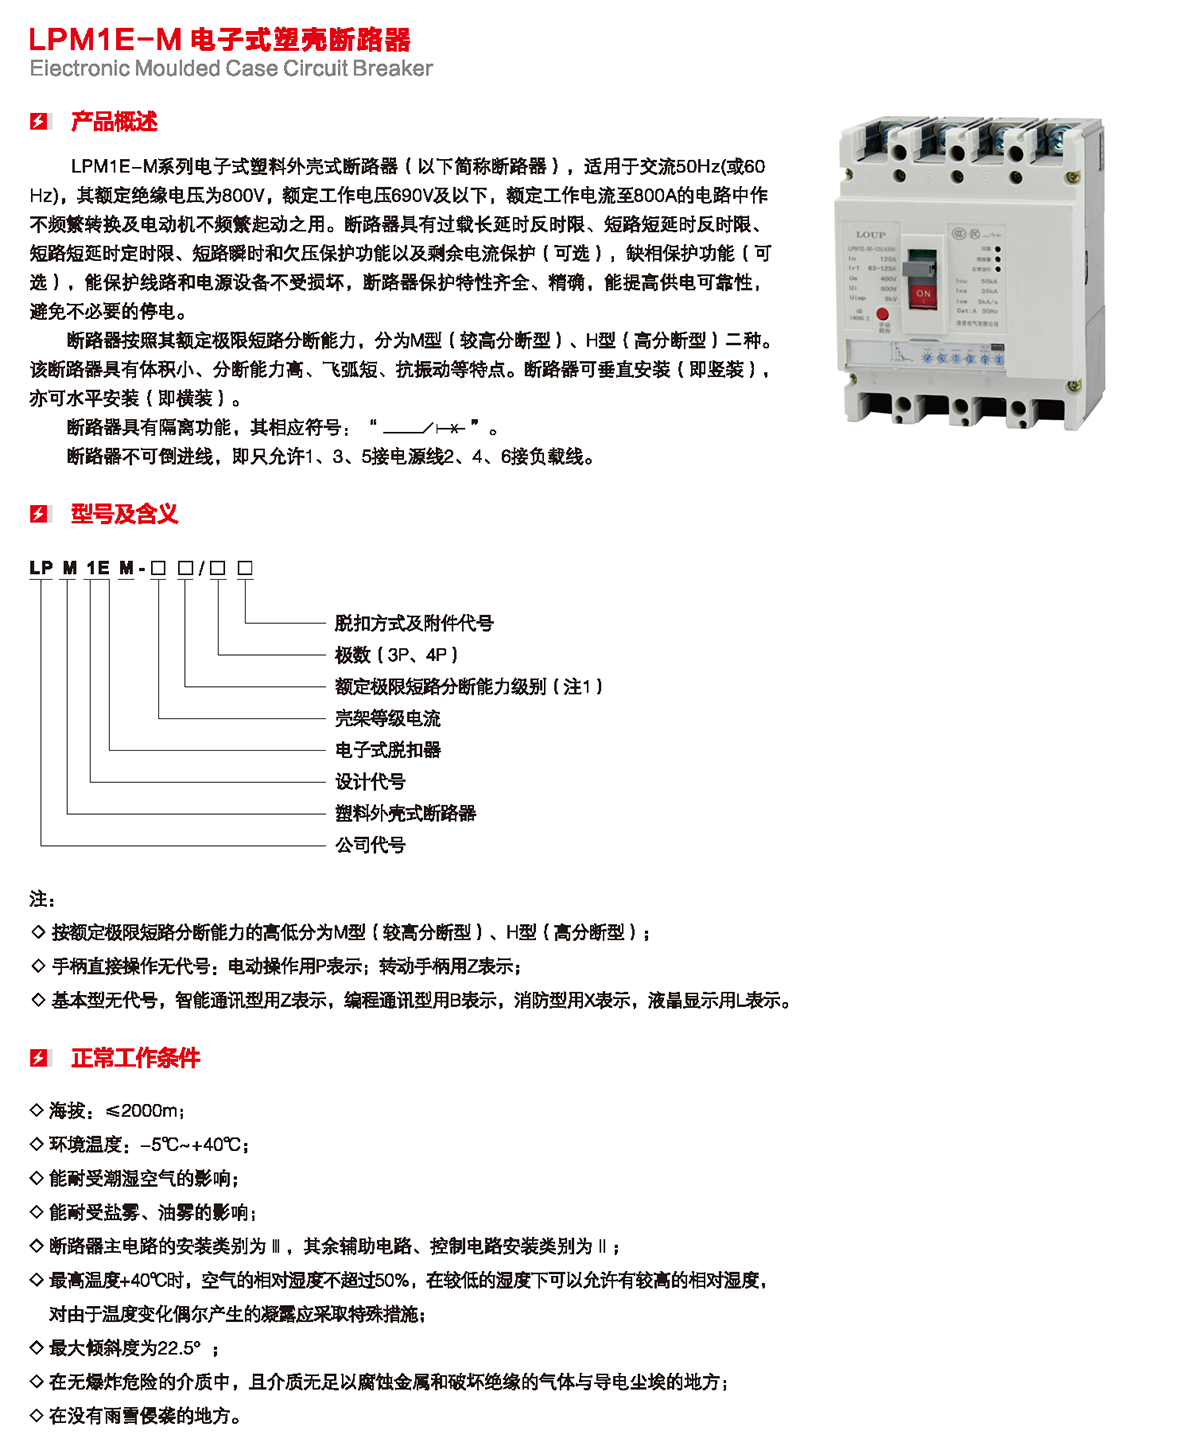 LPM1E-M電子式塑殼斷路器產品概述、型號含義、正常工作條件